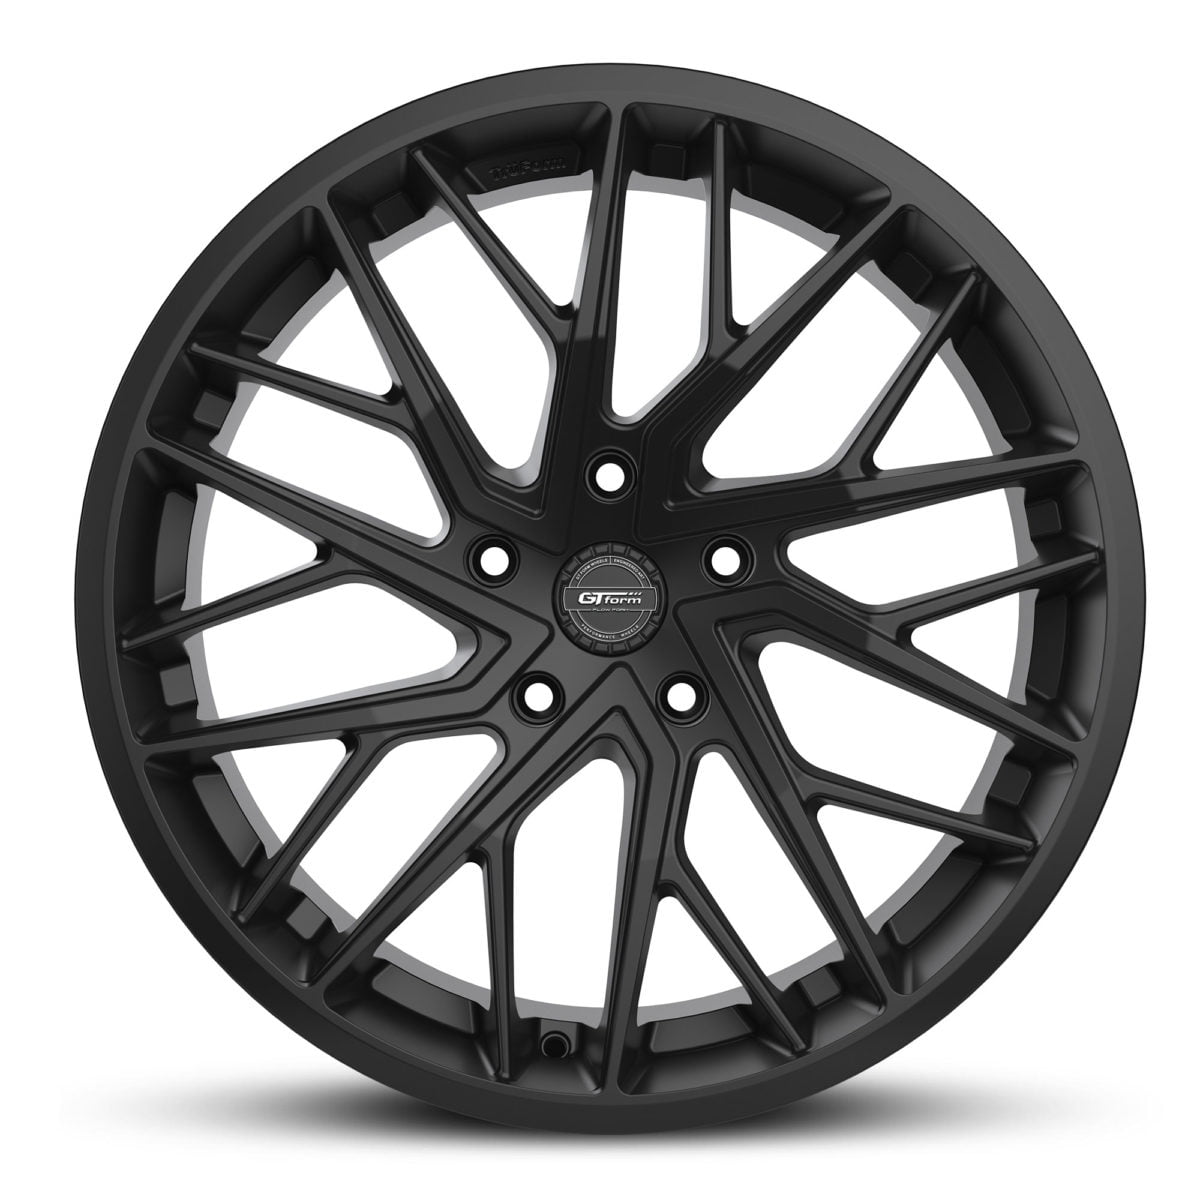 GT Form Vertex Satin Black Rims Performance Wheels